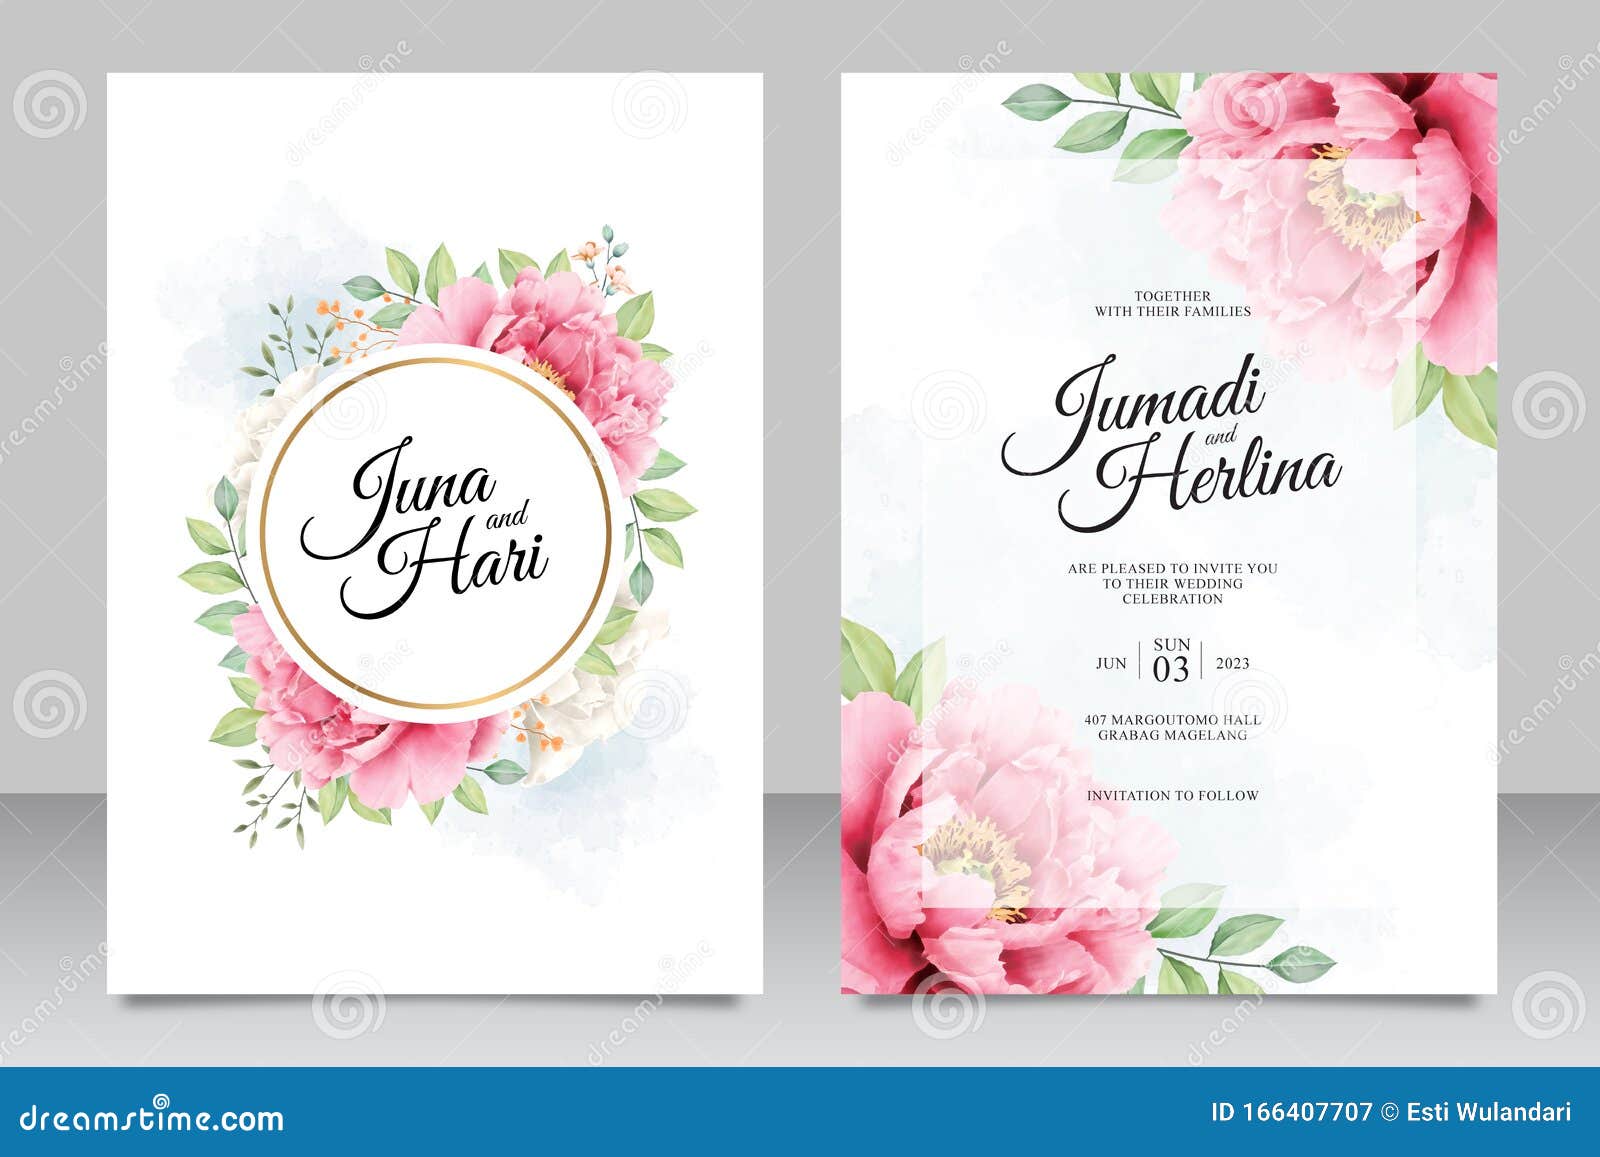 beautiful watercolor peonies wedding invitation